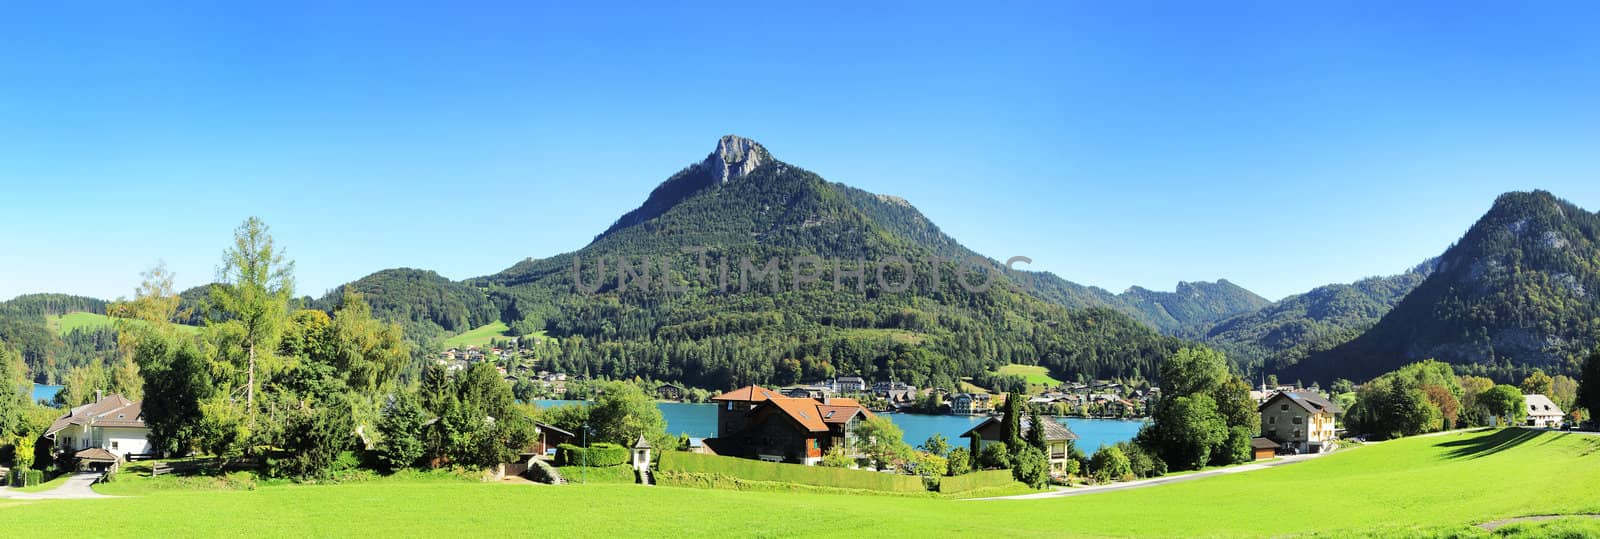 Village near the lake in the Alps mountains. Austria